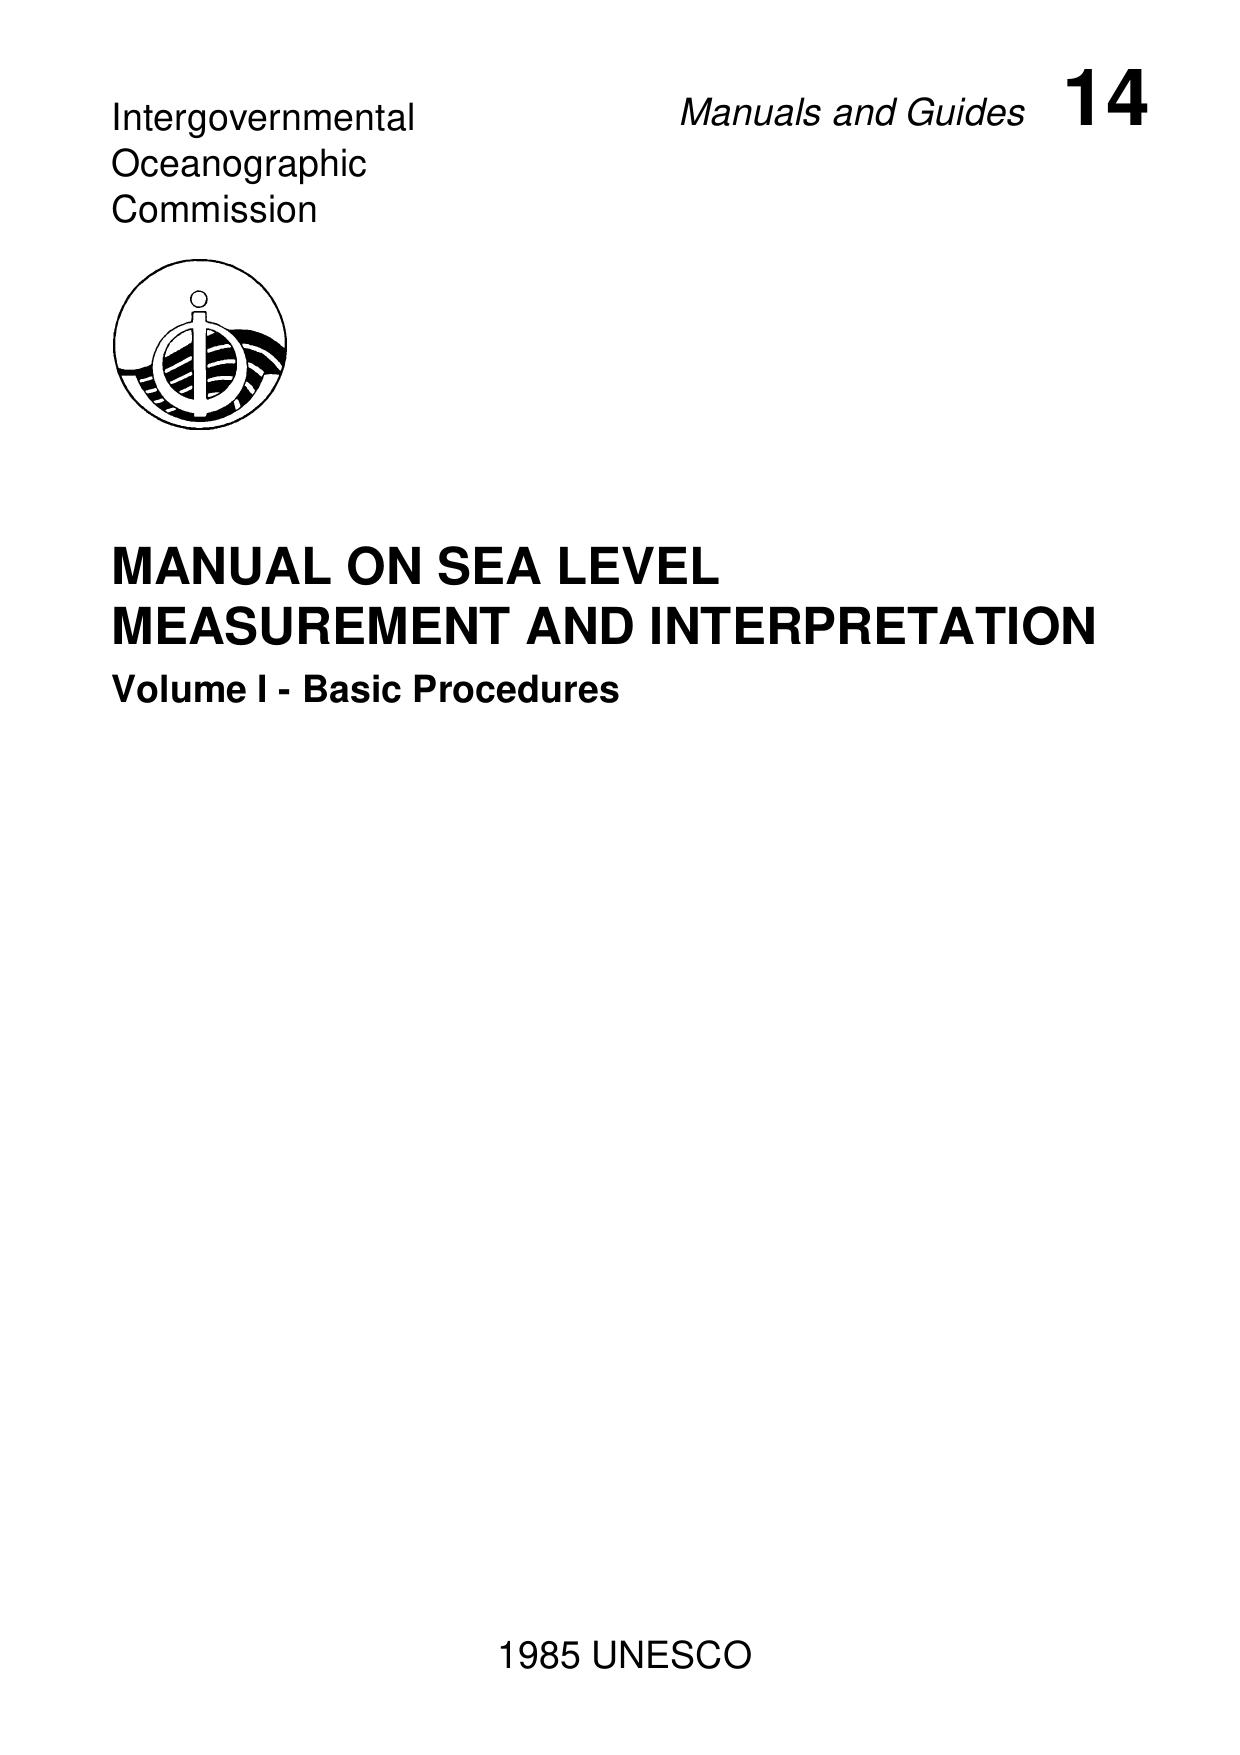 IOC Manuals and Guides 14:  Manual on Sea Level Measurement and Interpretation